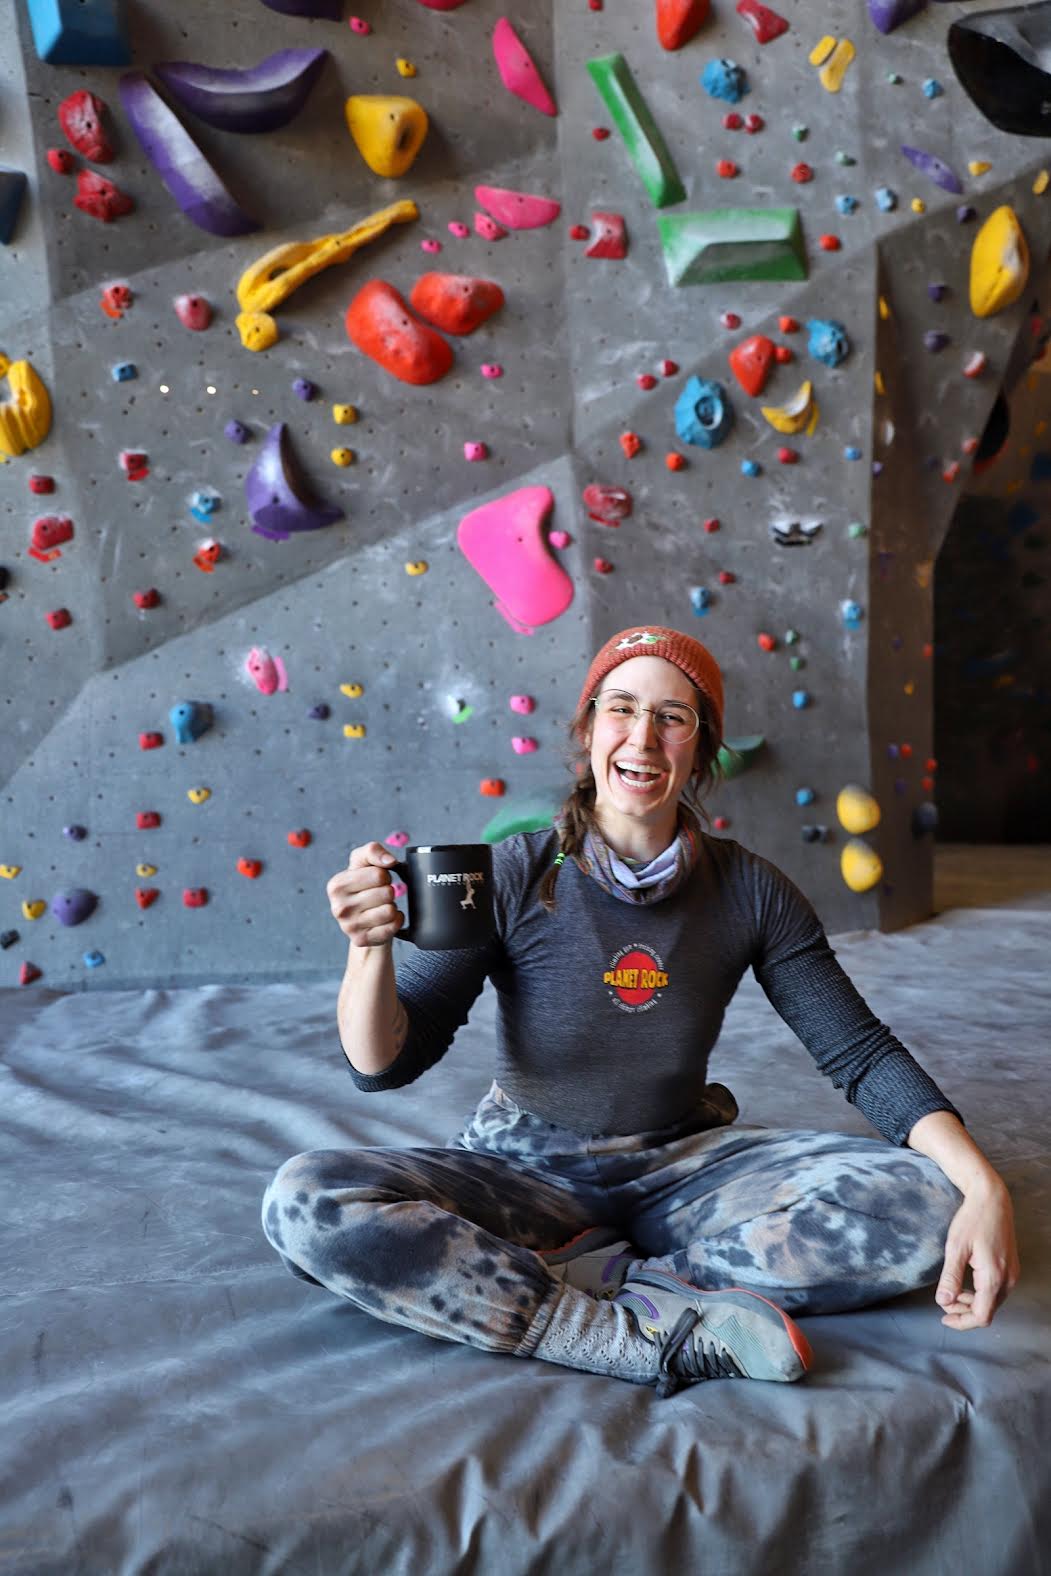 First Time Climbing? – Planet Rock Climbing Gyms